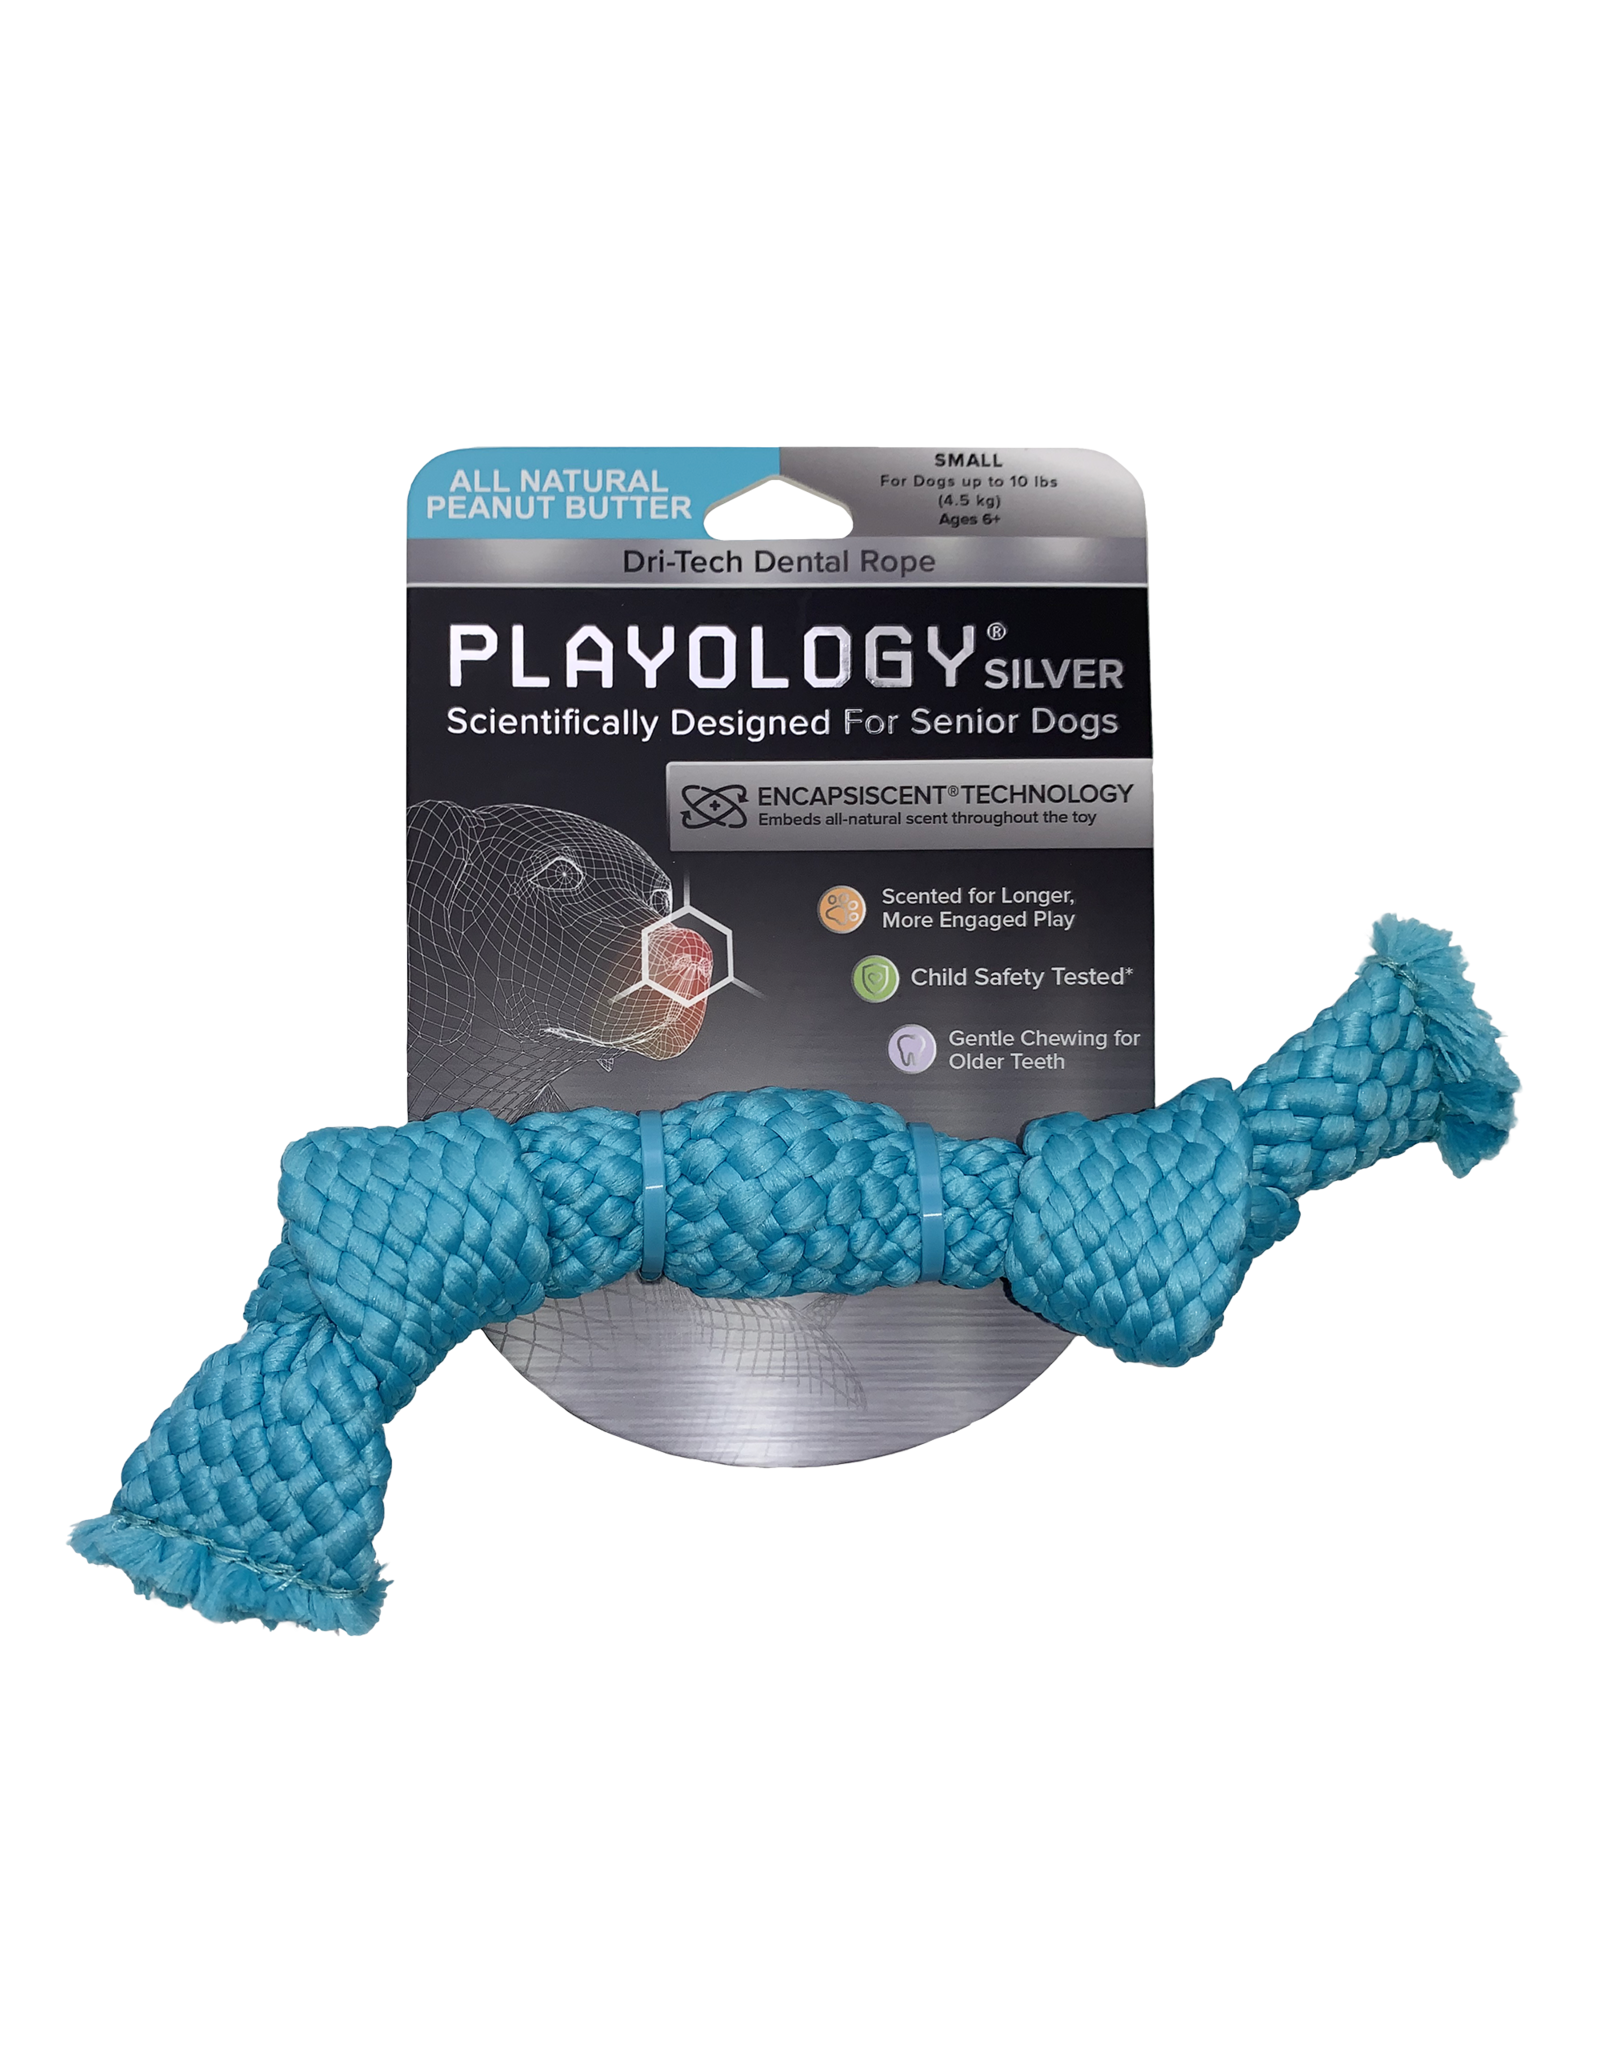 Playology Dental Rope - Peanut Butter